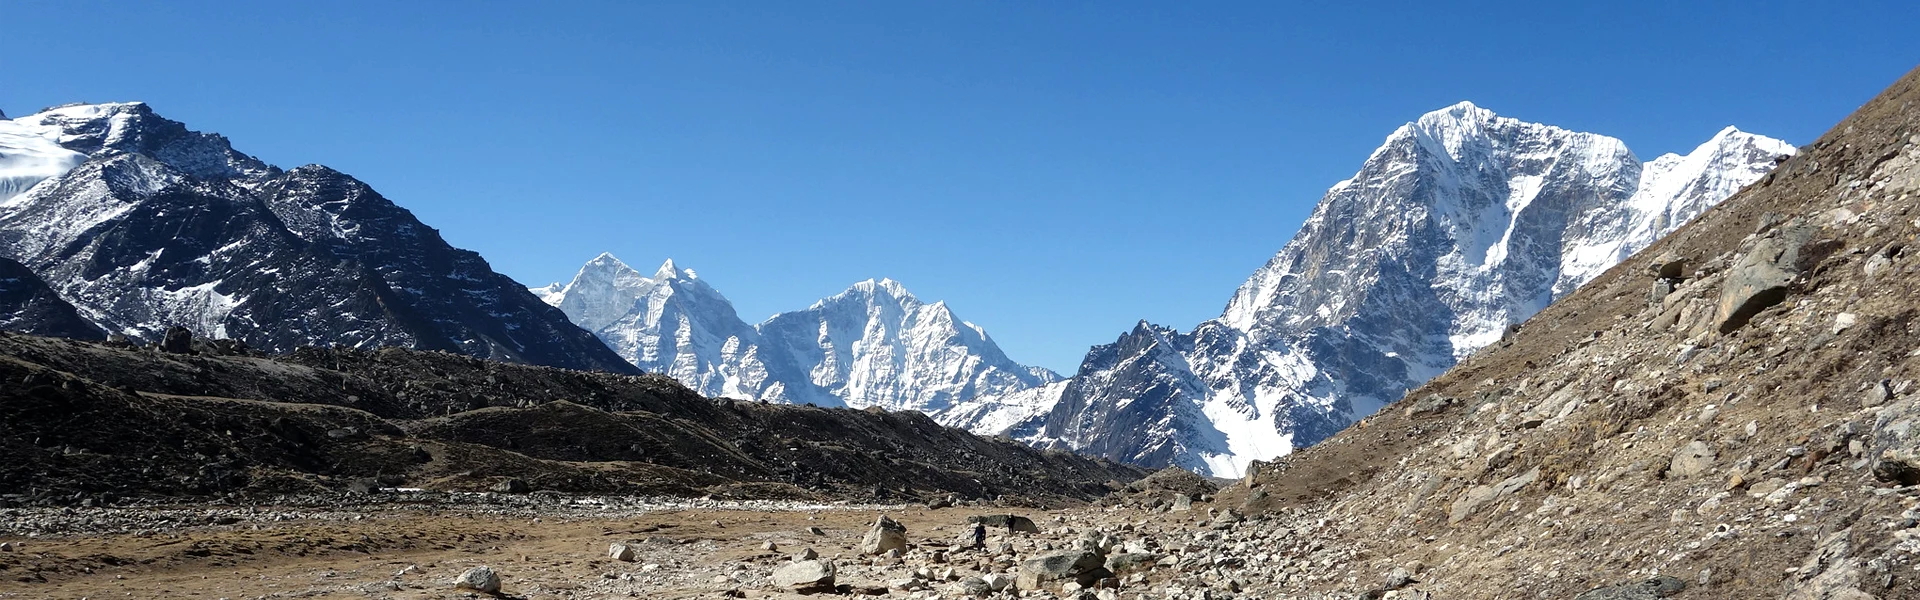 Everest Base Camp with Lobuche peak climbing